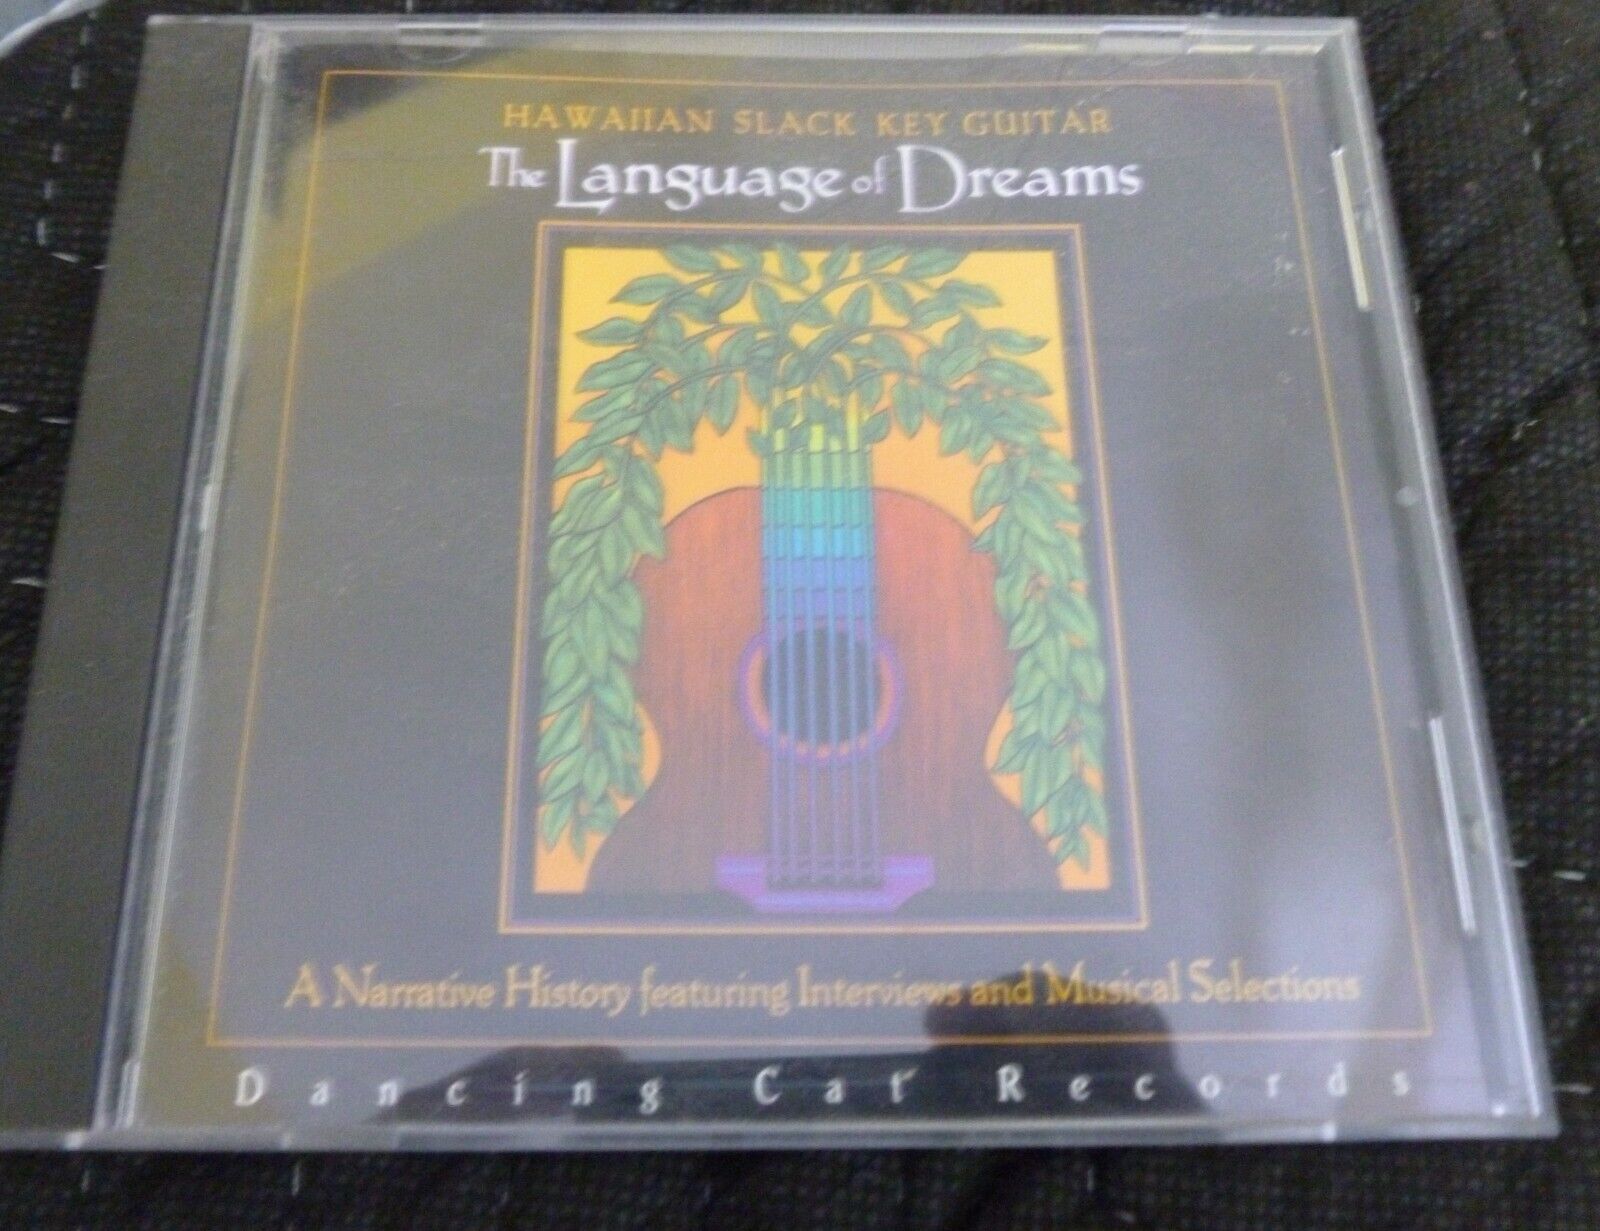 The Language of Dreams - Hawaiian Slack Key Guitar (Music CD, 2007) Remainder CD